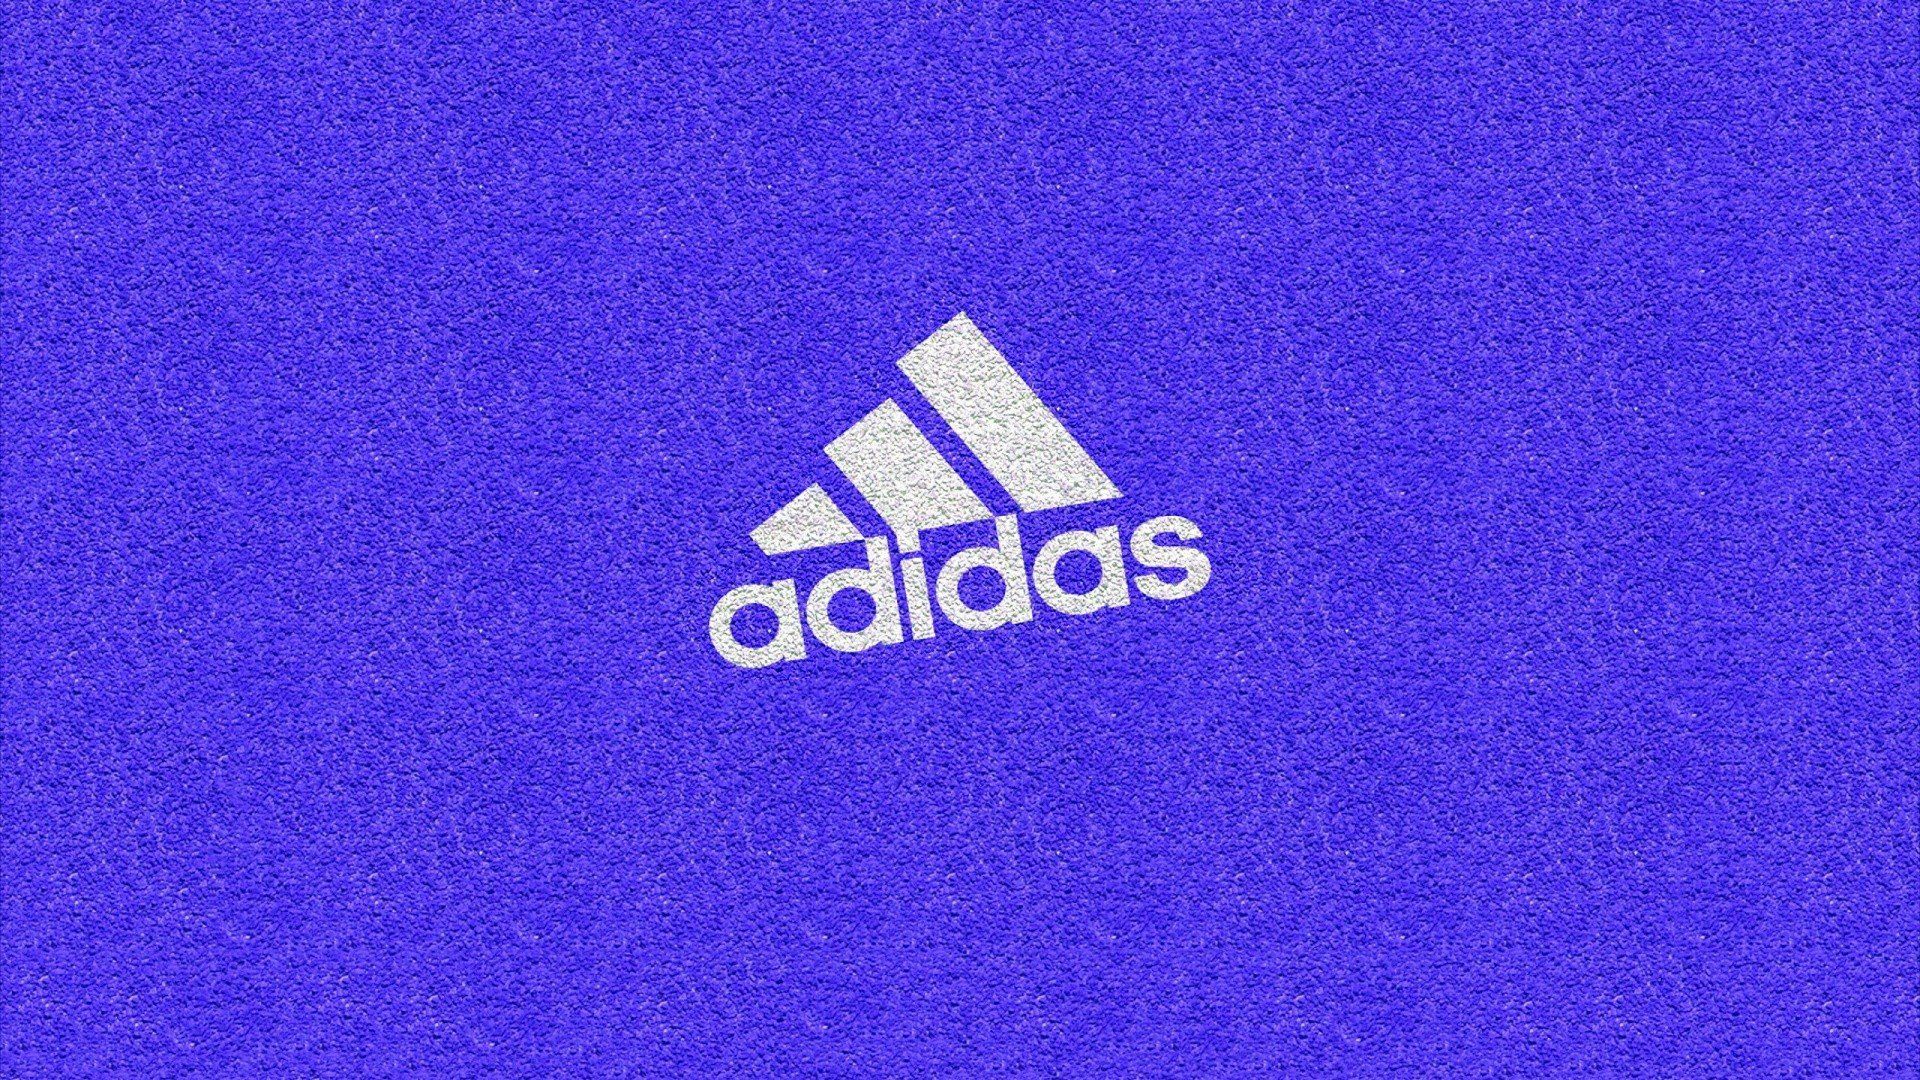 Adidas Wallpaper Background, Image & Photo